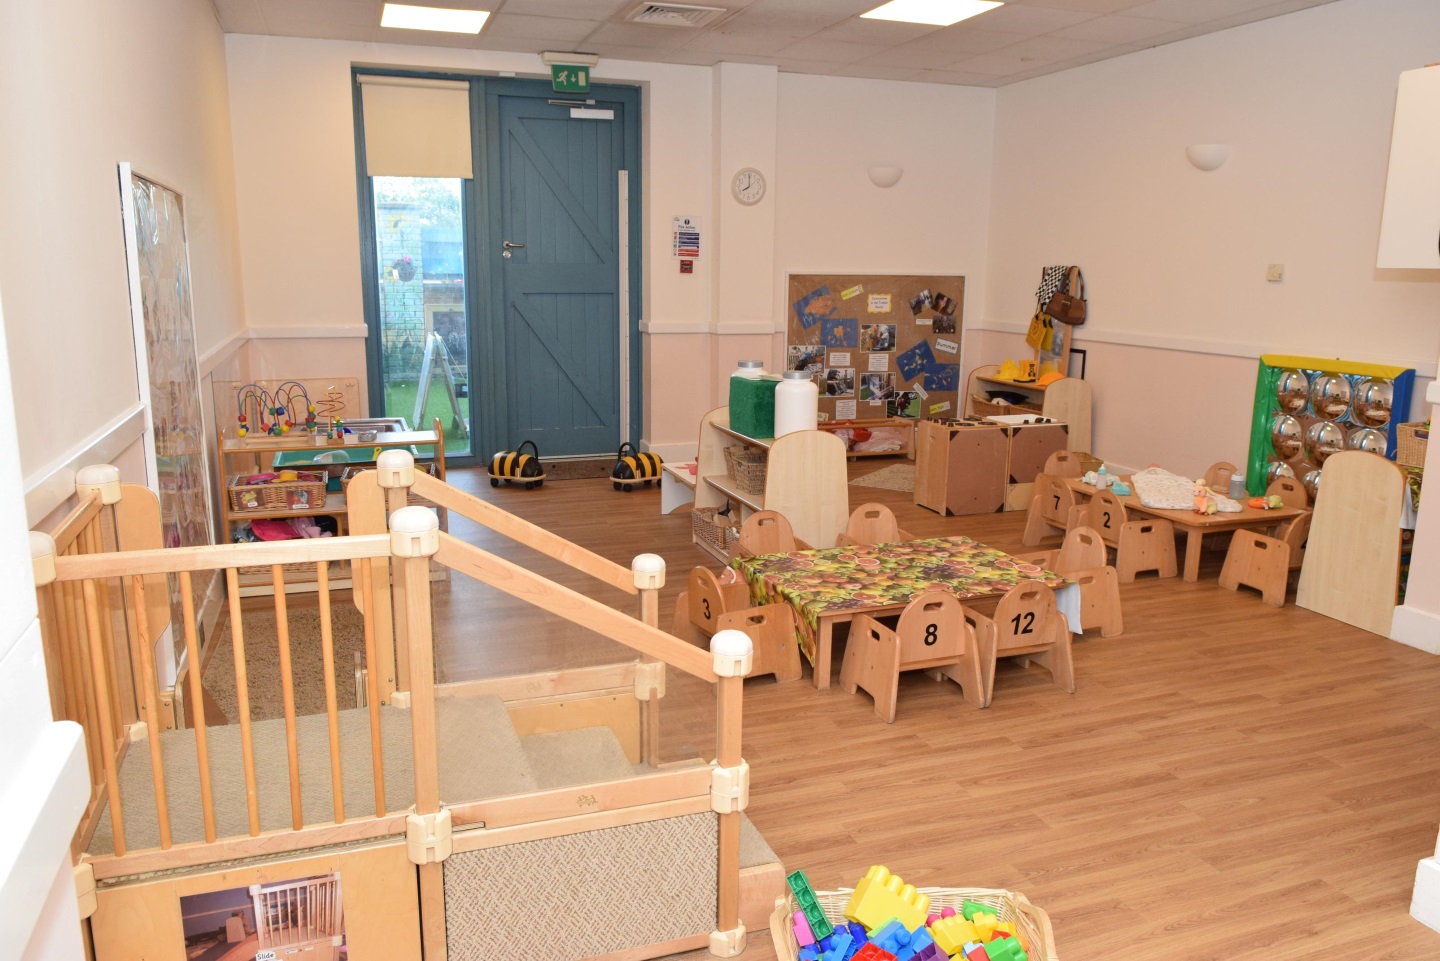 Bright Horizons Port Solent Day Nursery and Preschool Port Solent 03339 203044